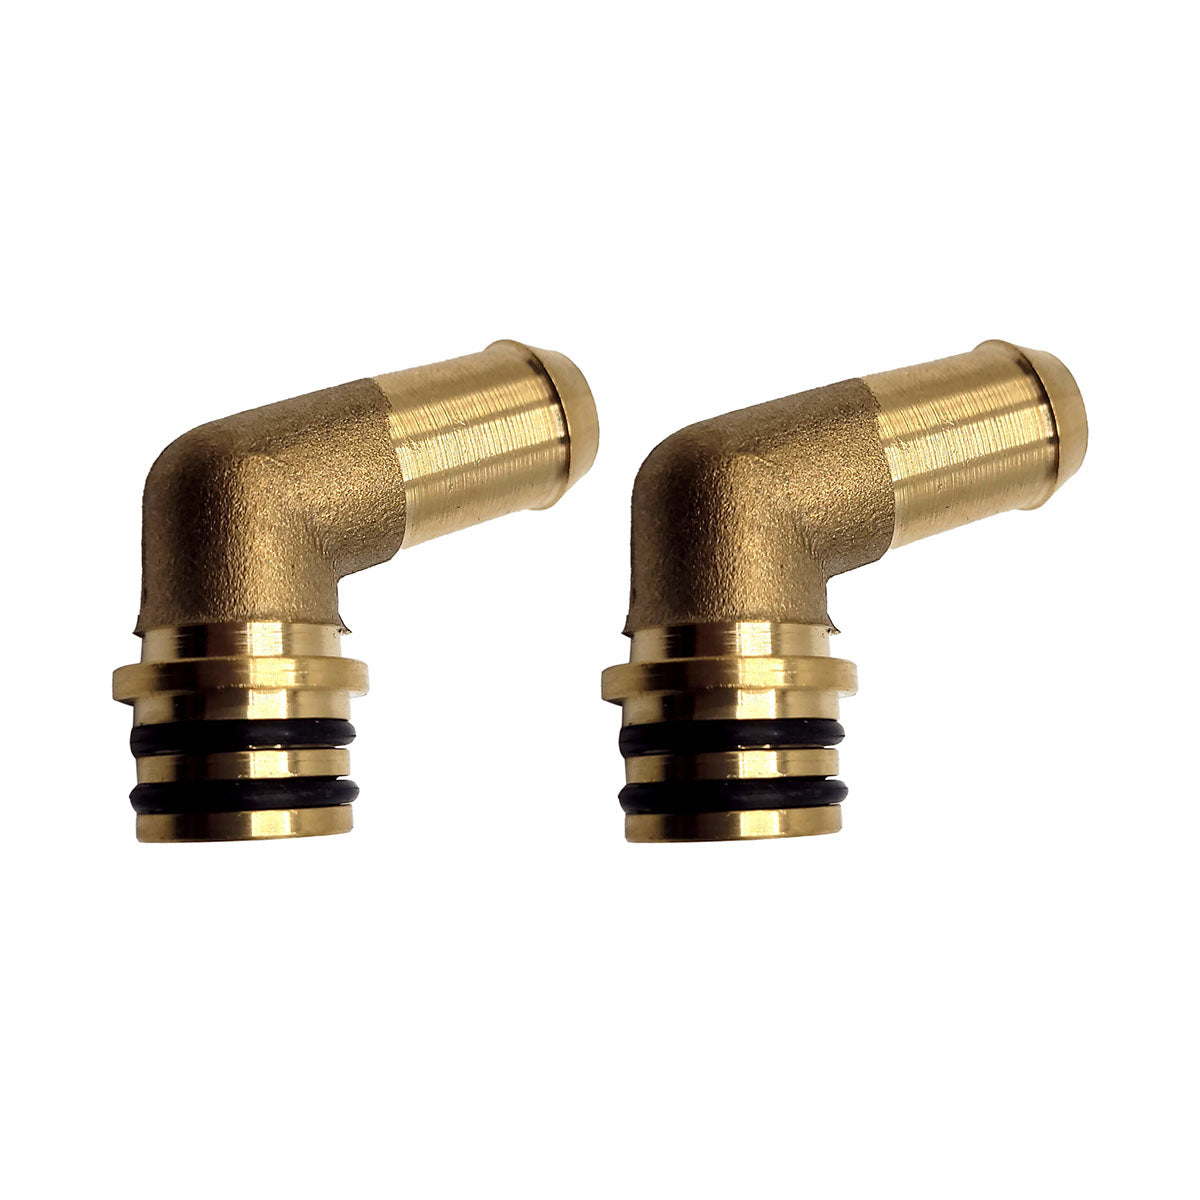 Two 19-16mm Water Coolant Brass Elbows for KME PRINS VSI LPG Reducer Ø16 / Ø19